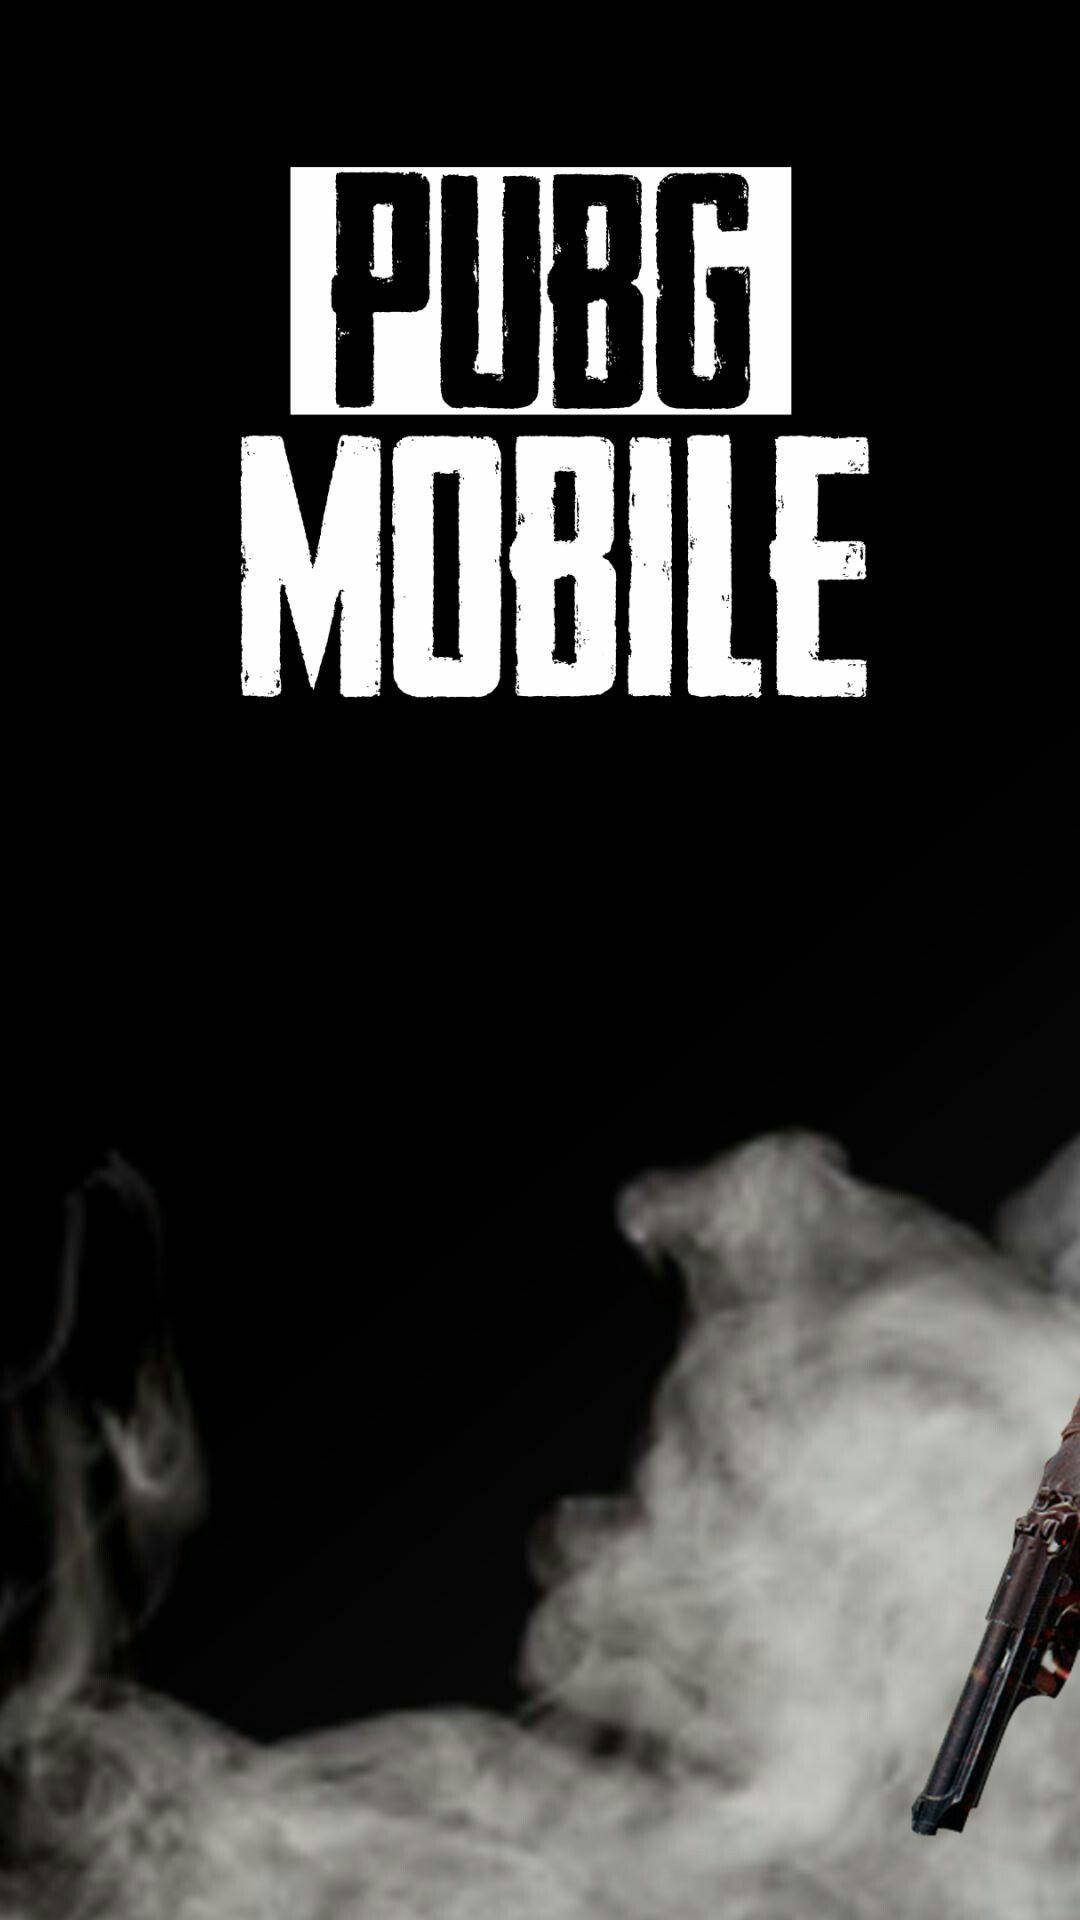 Mobilerpubg-logo Wallpaper